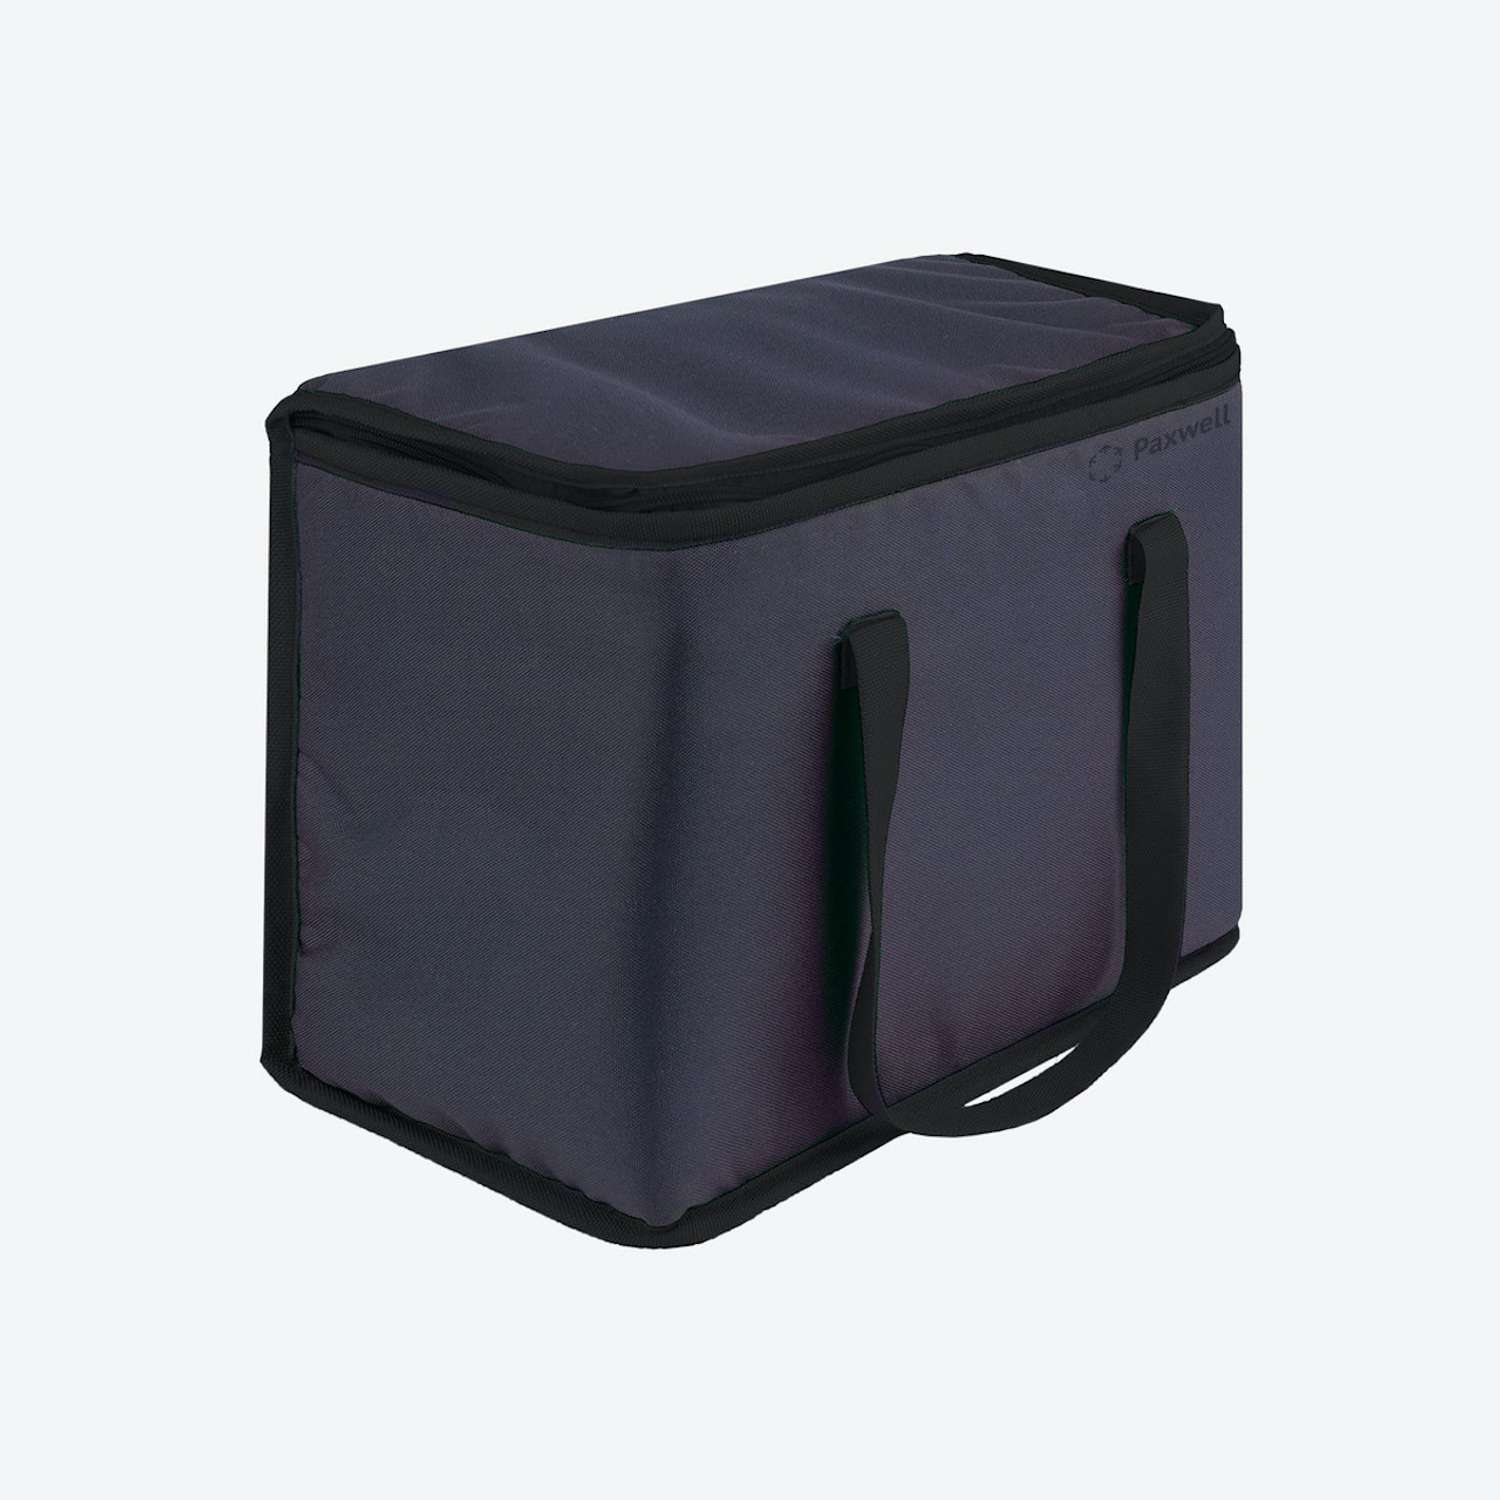 Сумка-холодильник Paxwell с ручками средняя 33х19х26 см Темно-синяя черная окантовка - фото 1